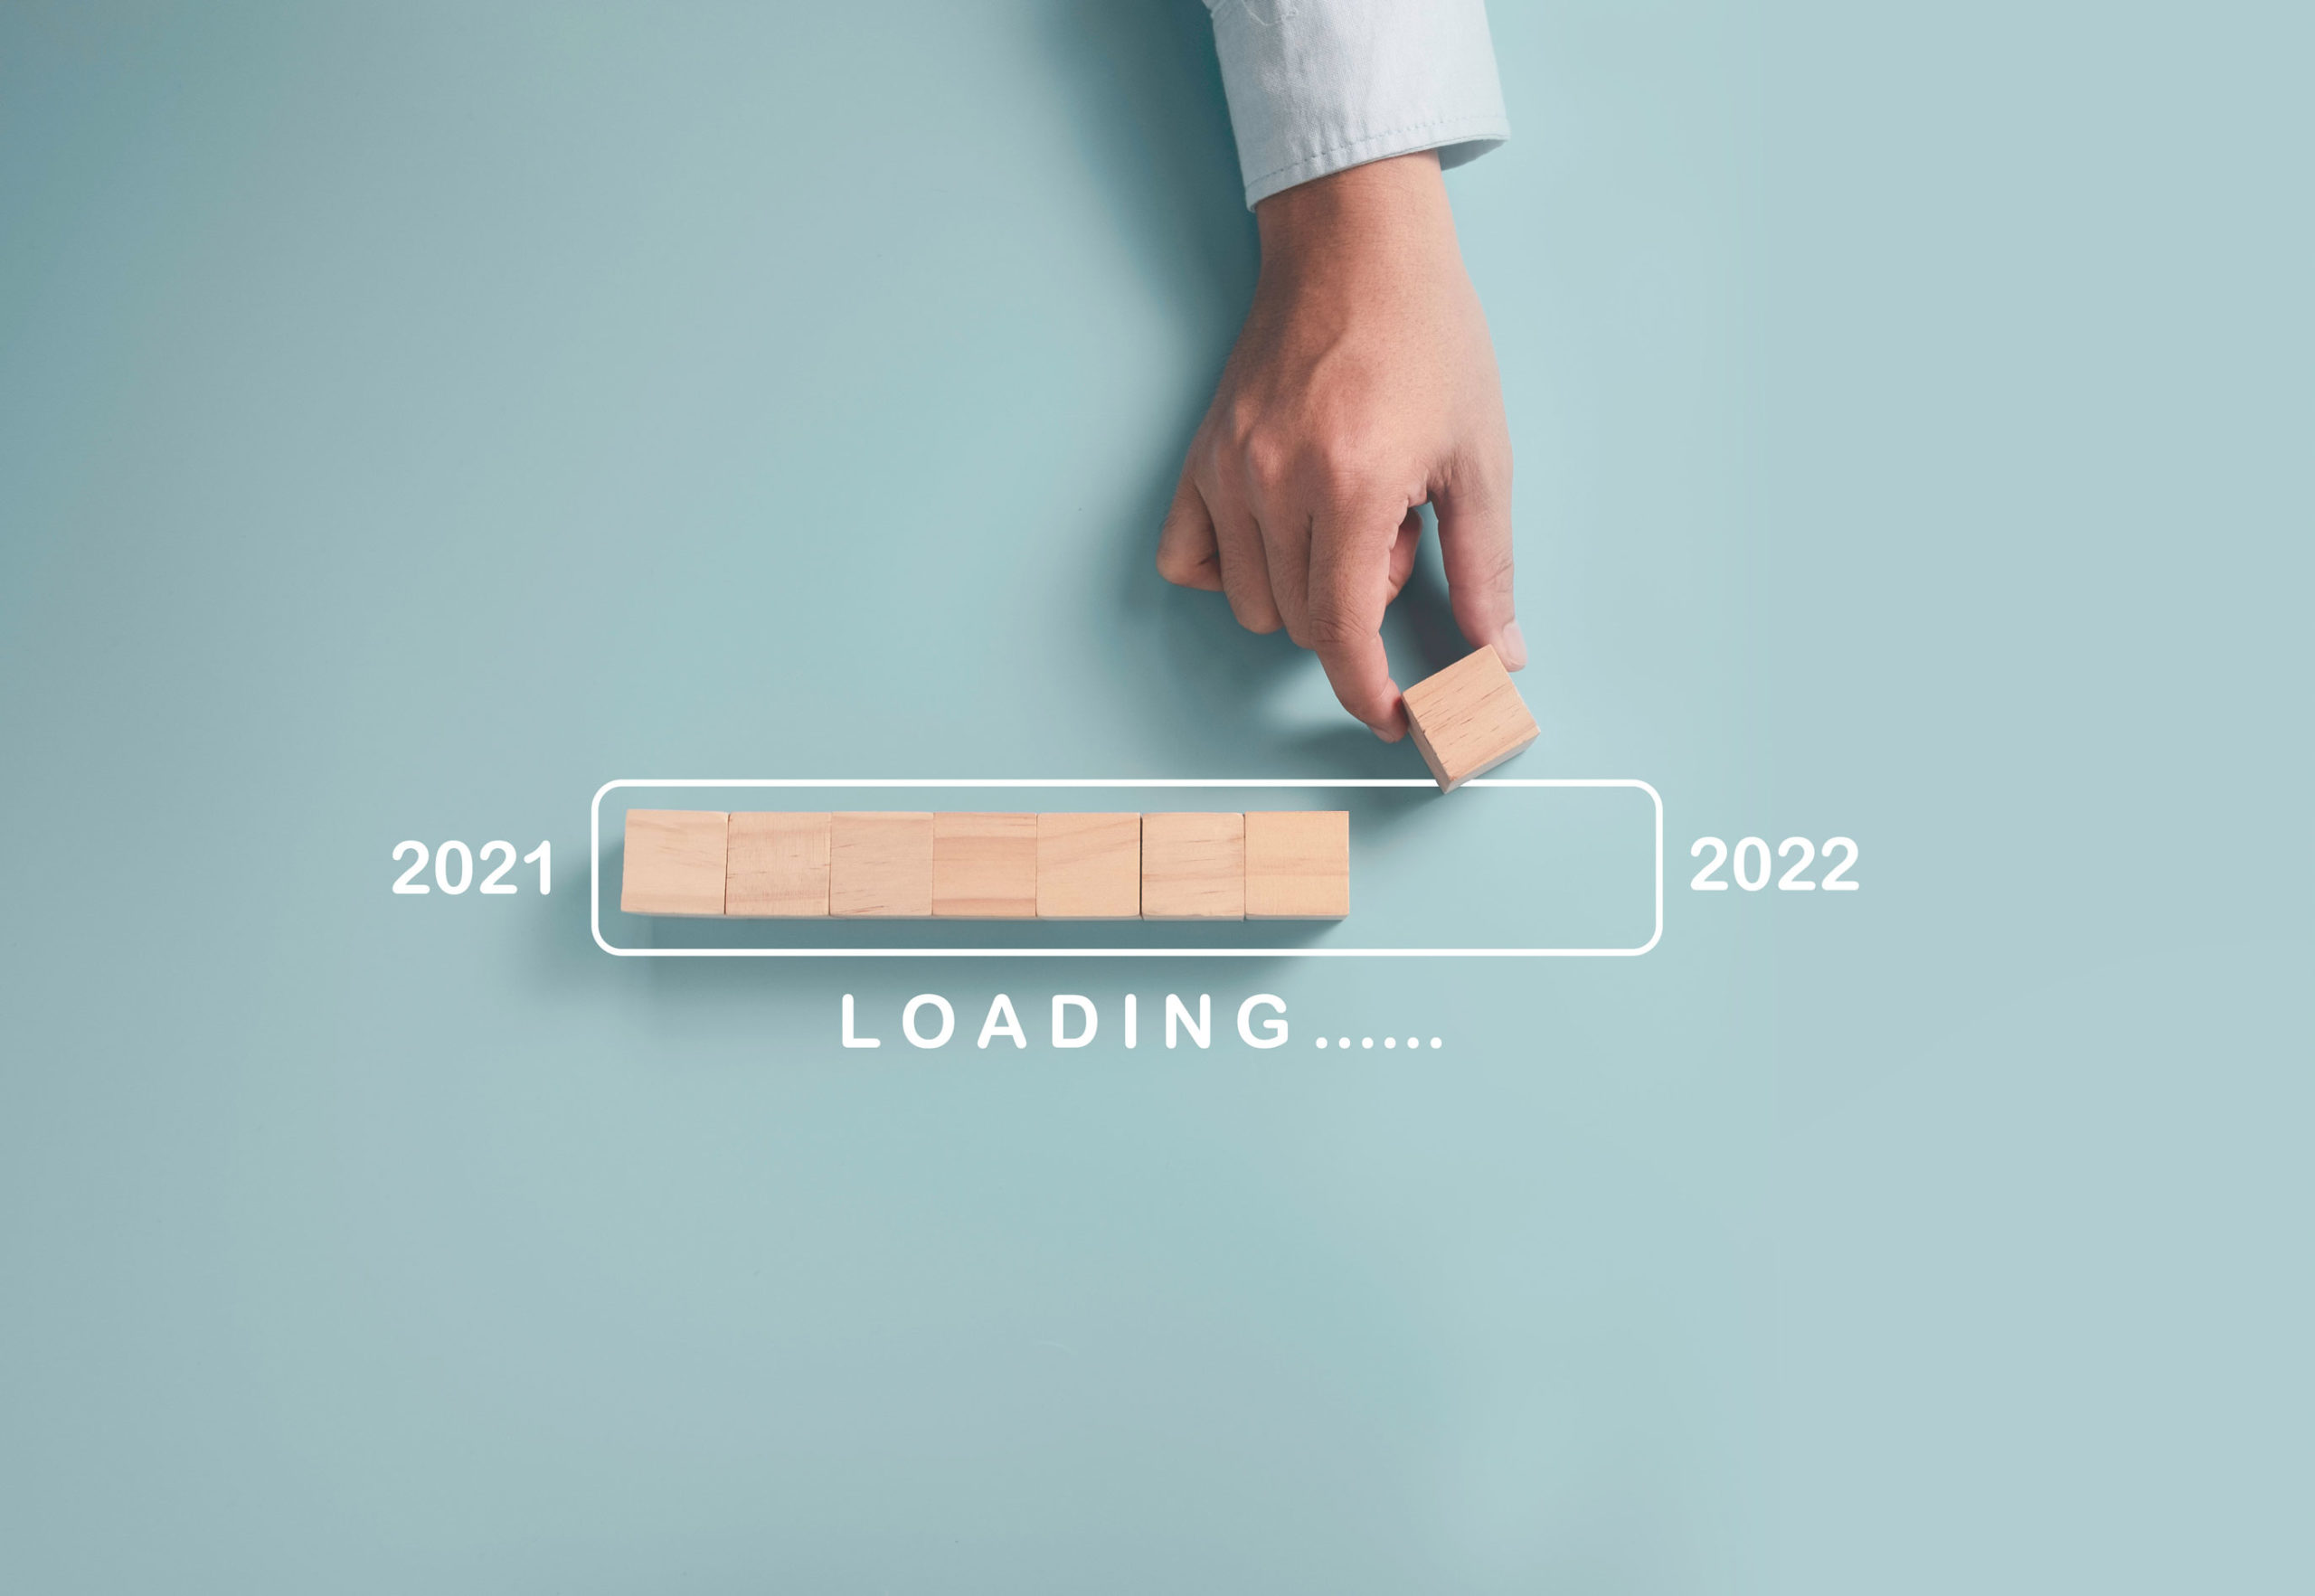 B2B marketing trends in 2022